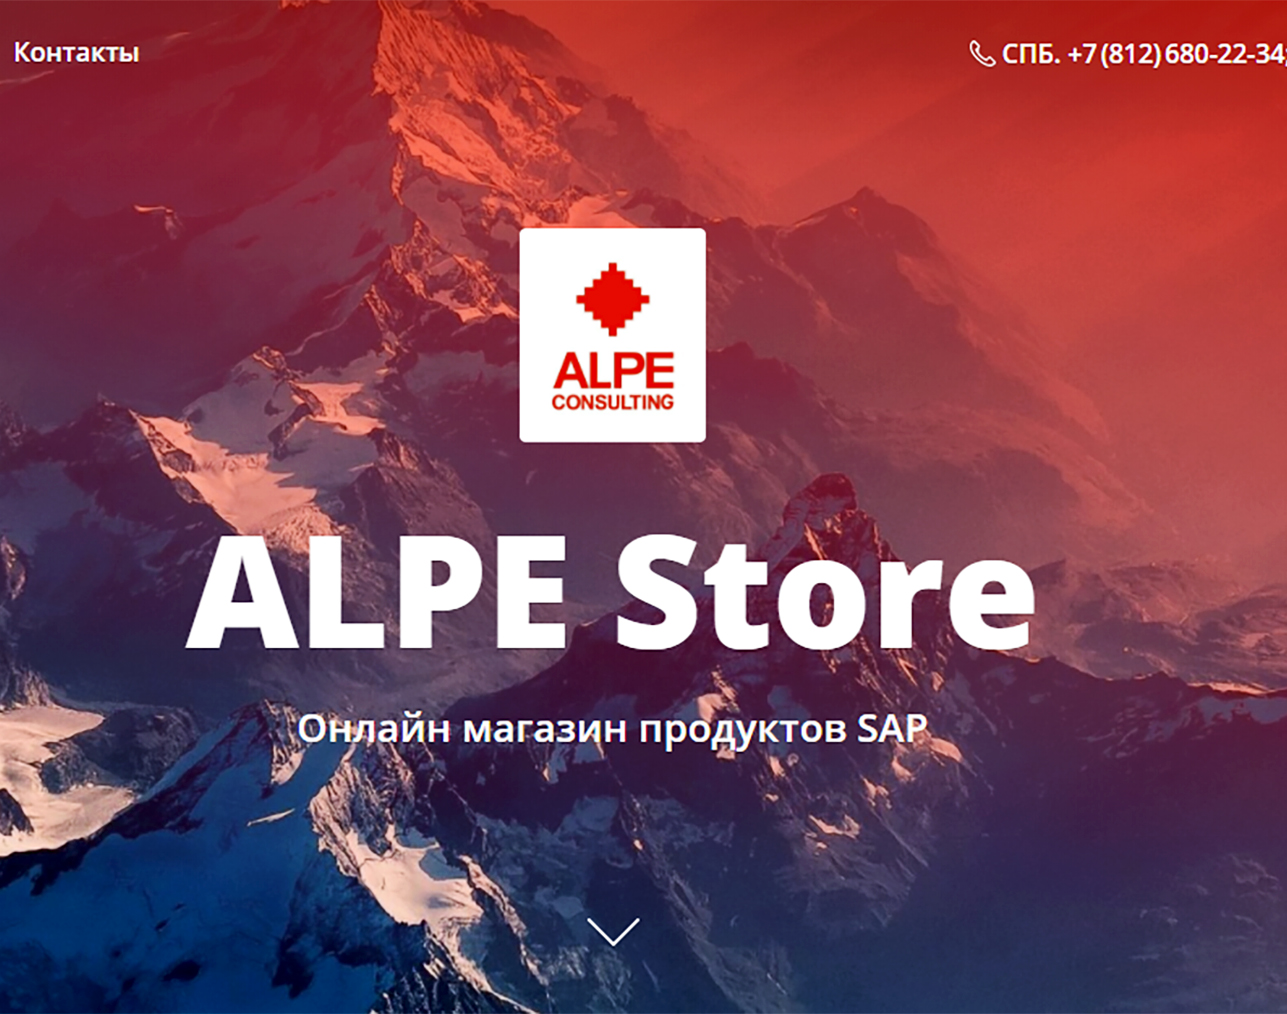 ALPE Store